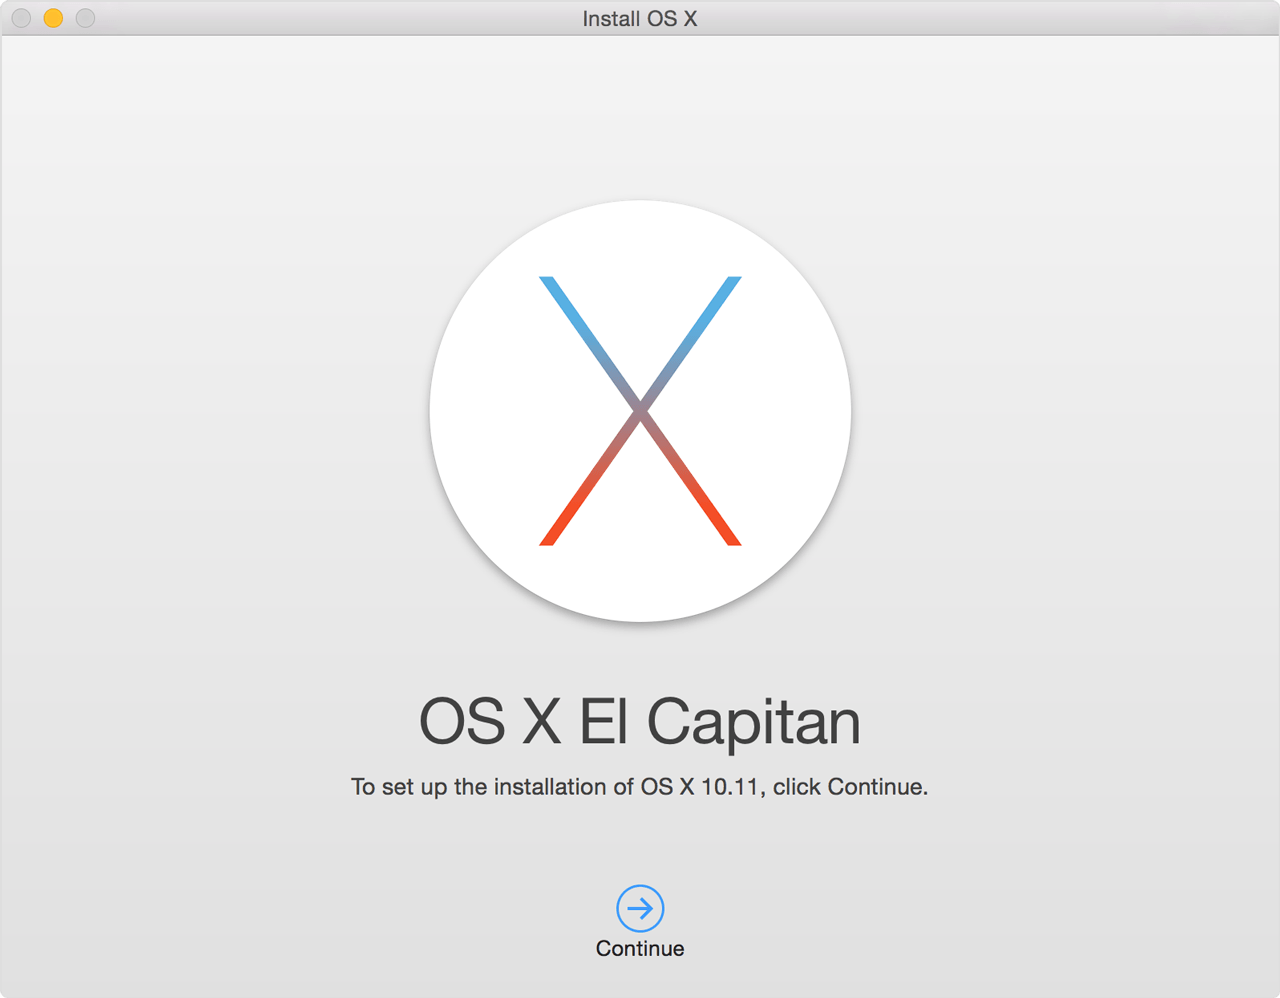 OS X Logo - How to upgrade to OS X El Capitan